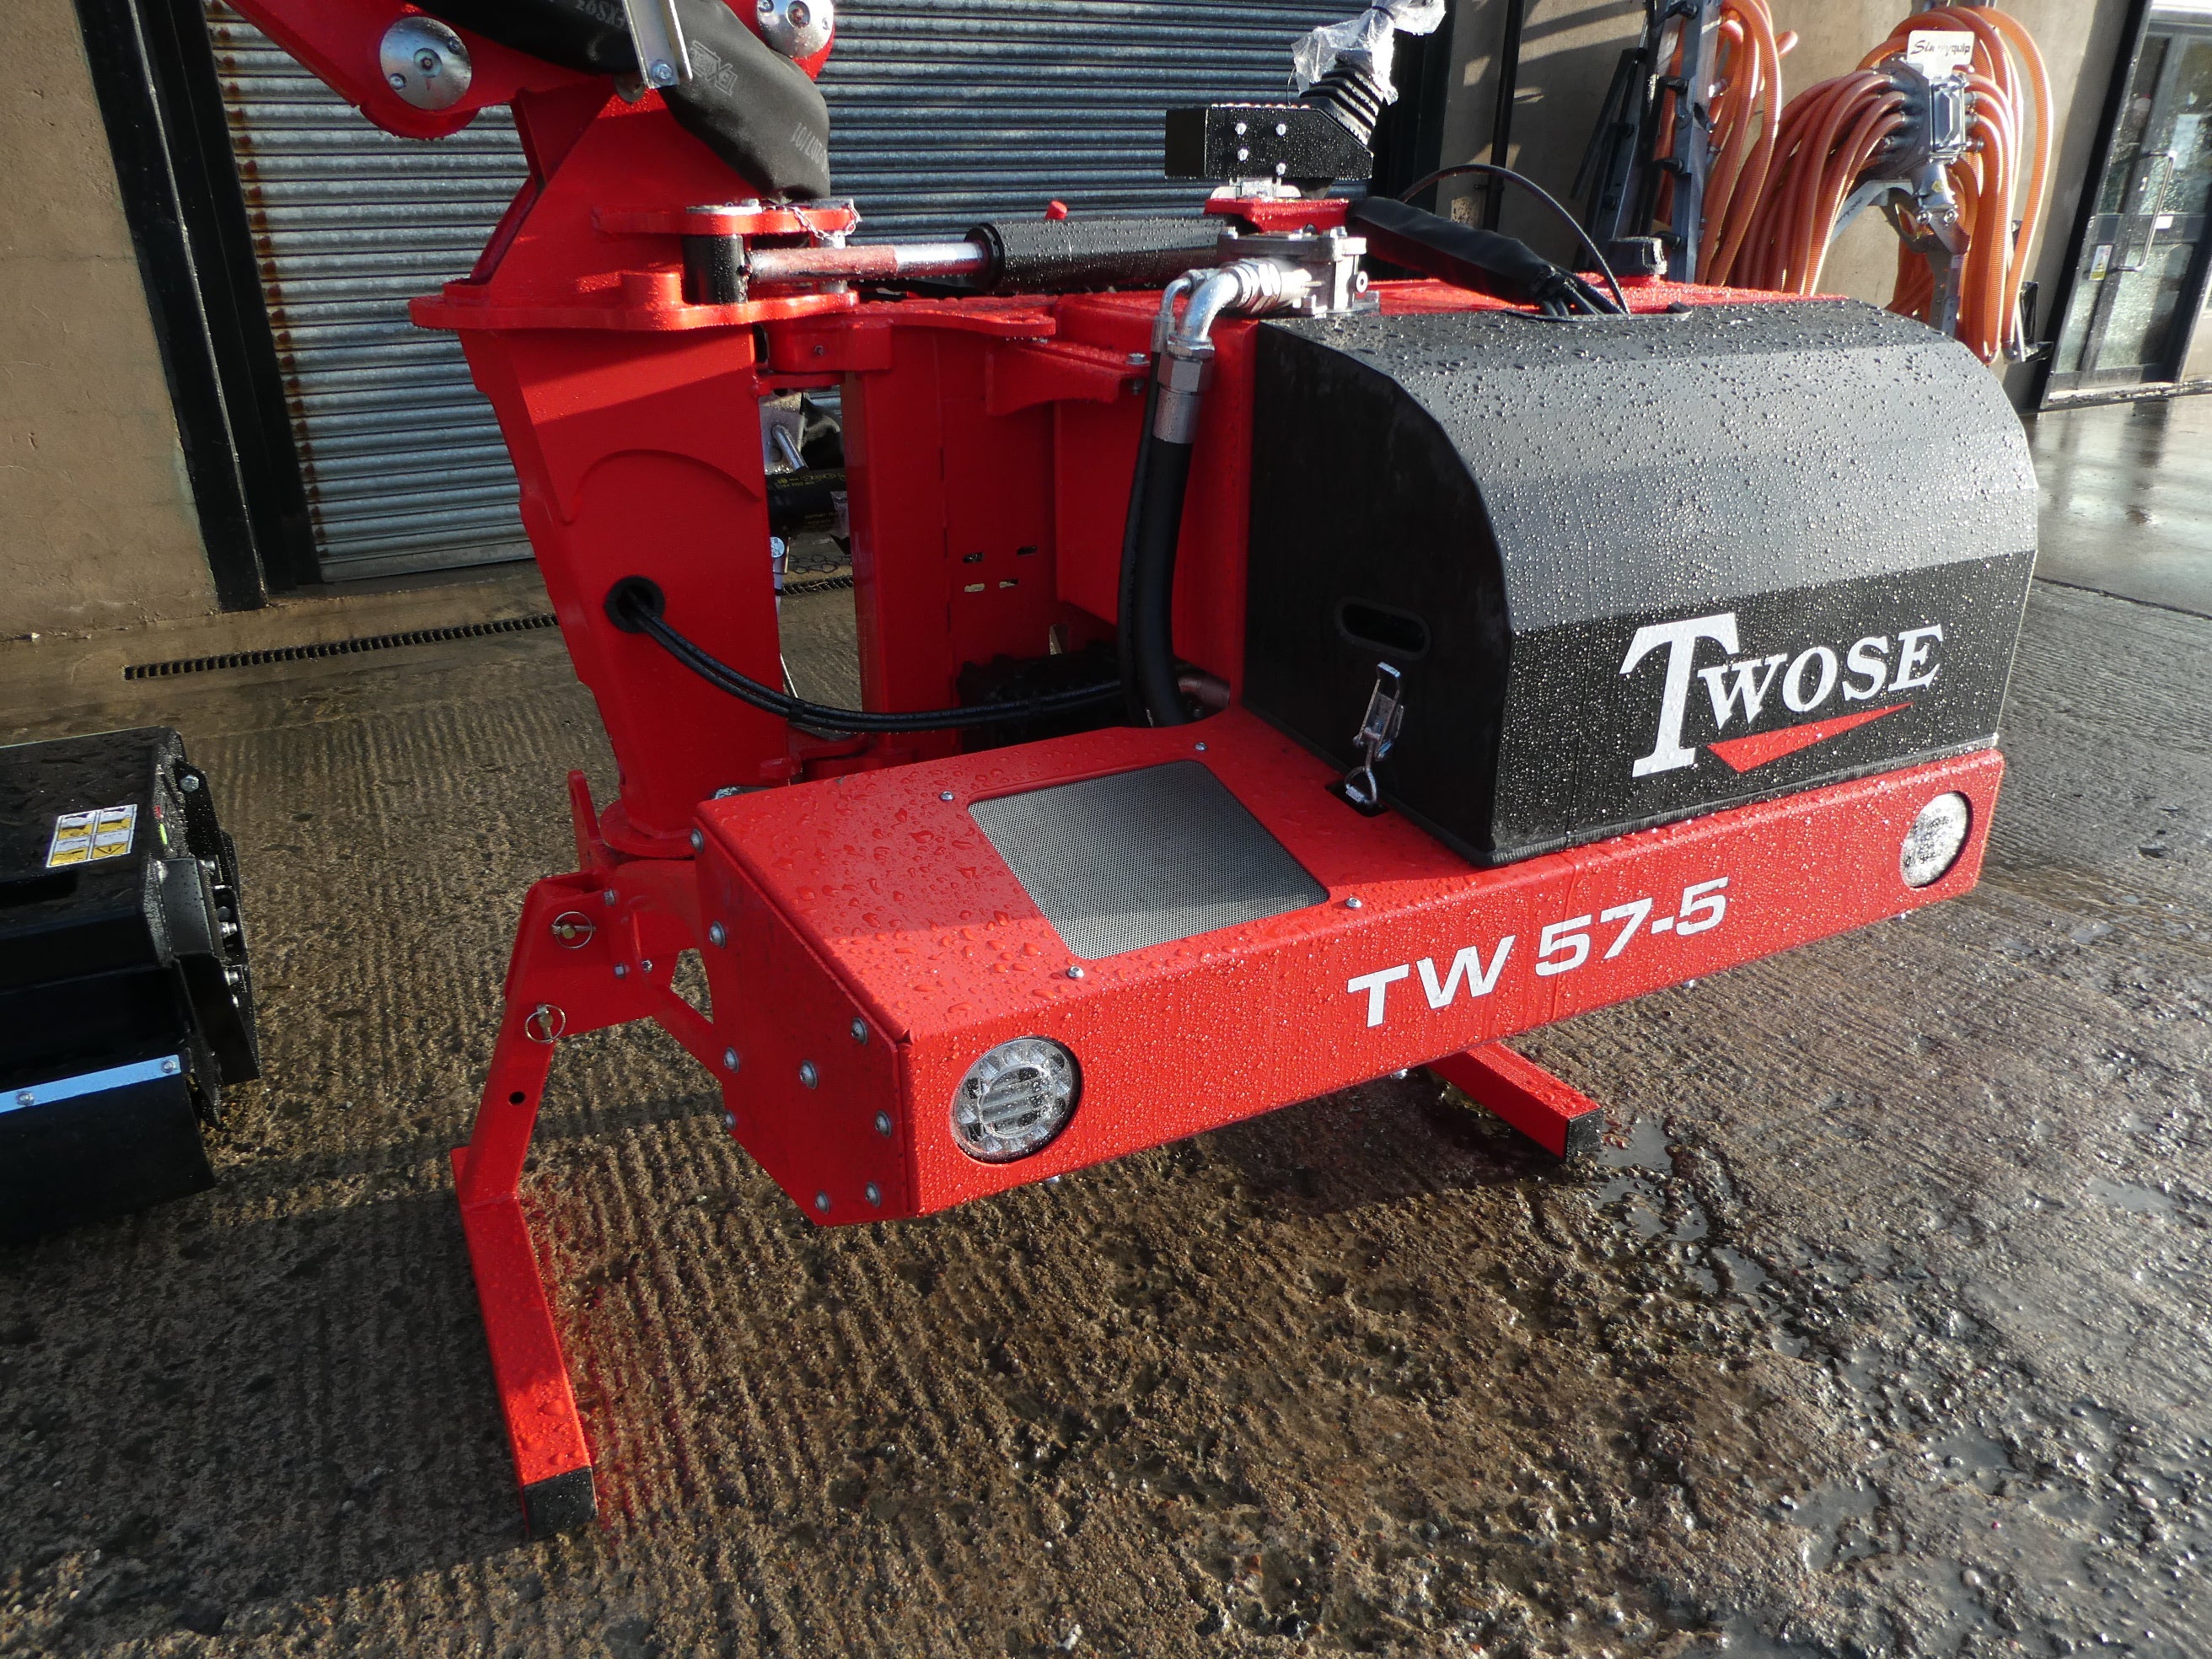 Twose TP57-5 Hedgecutter